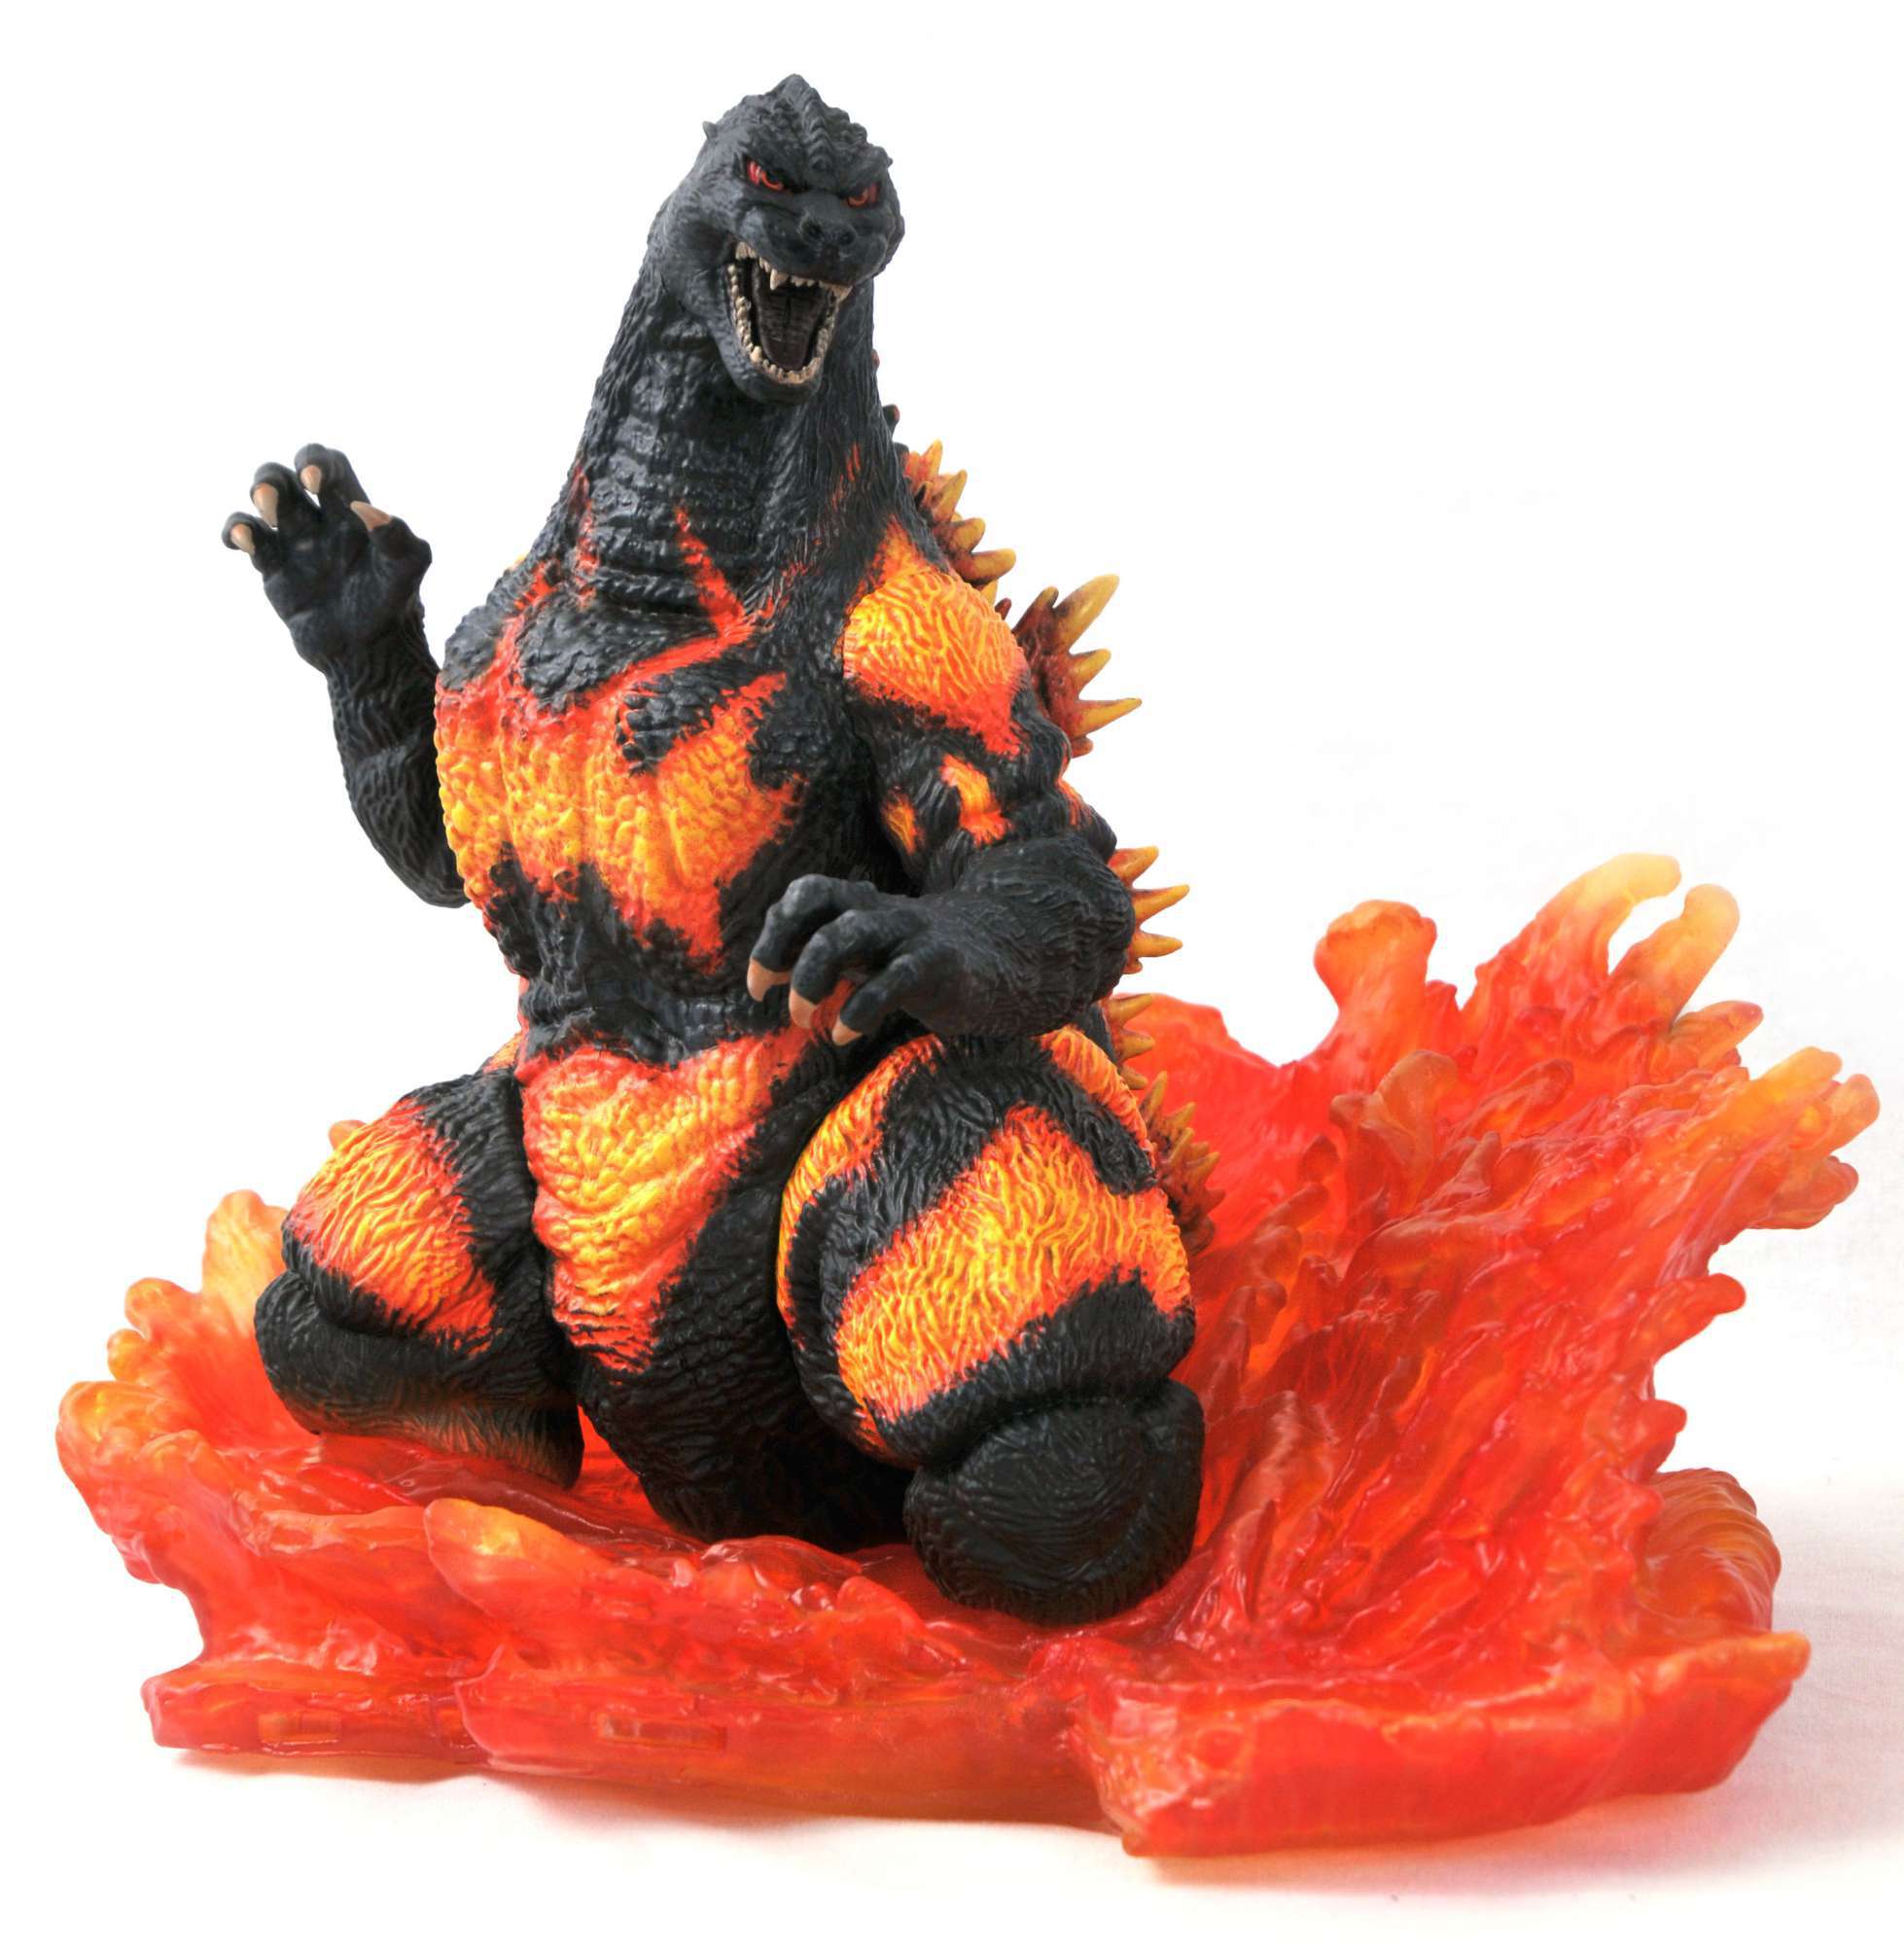 Diamond Select Toys Godzilla Gallery Godzilla Burning Version PVC